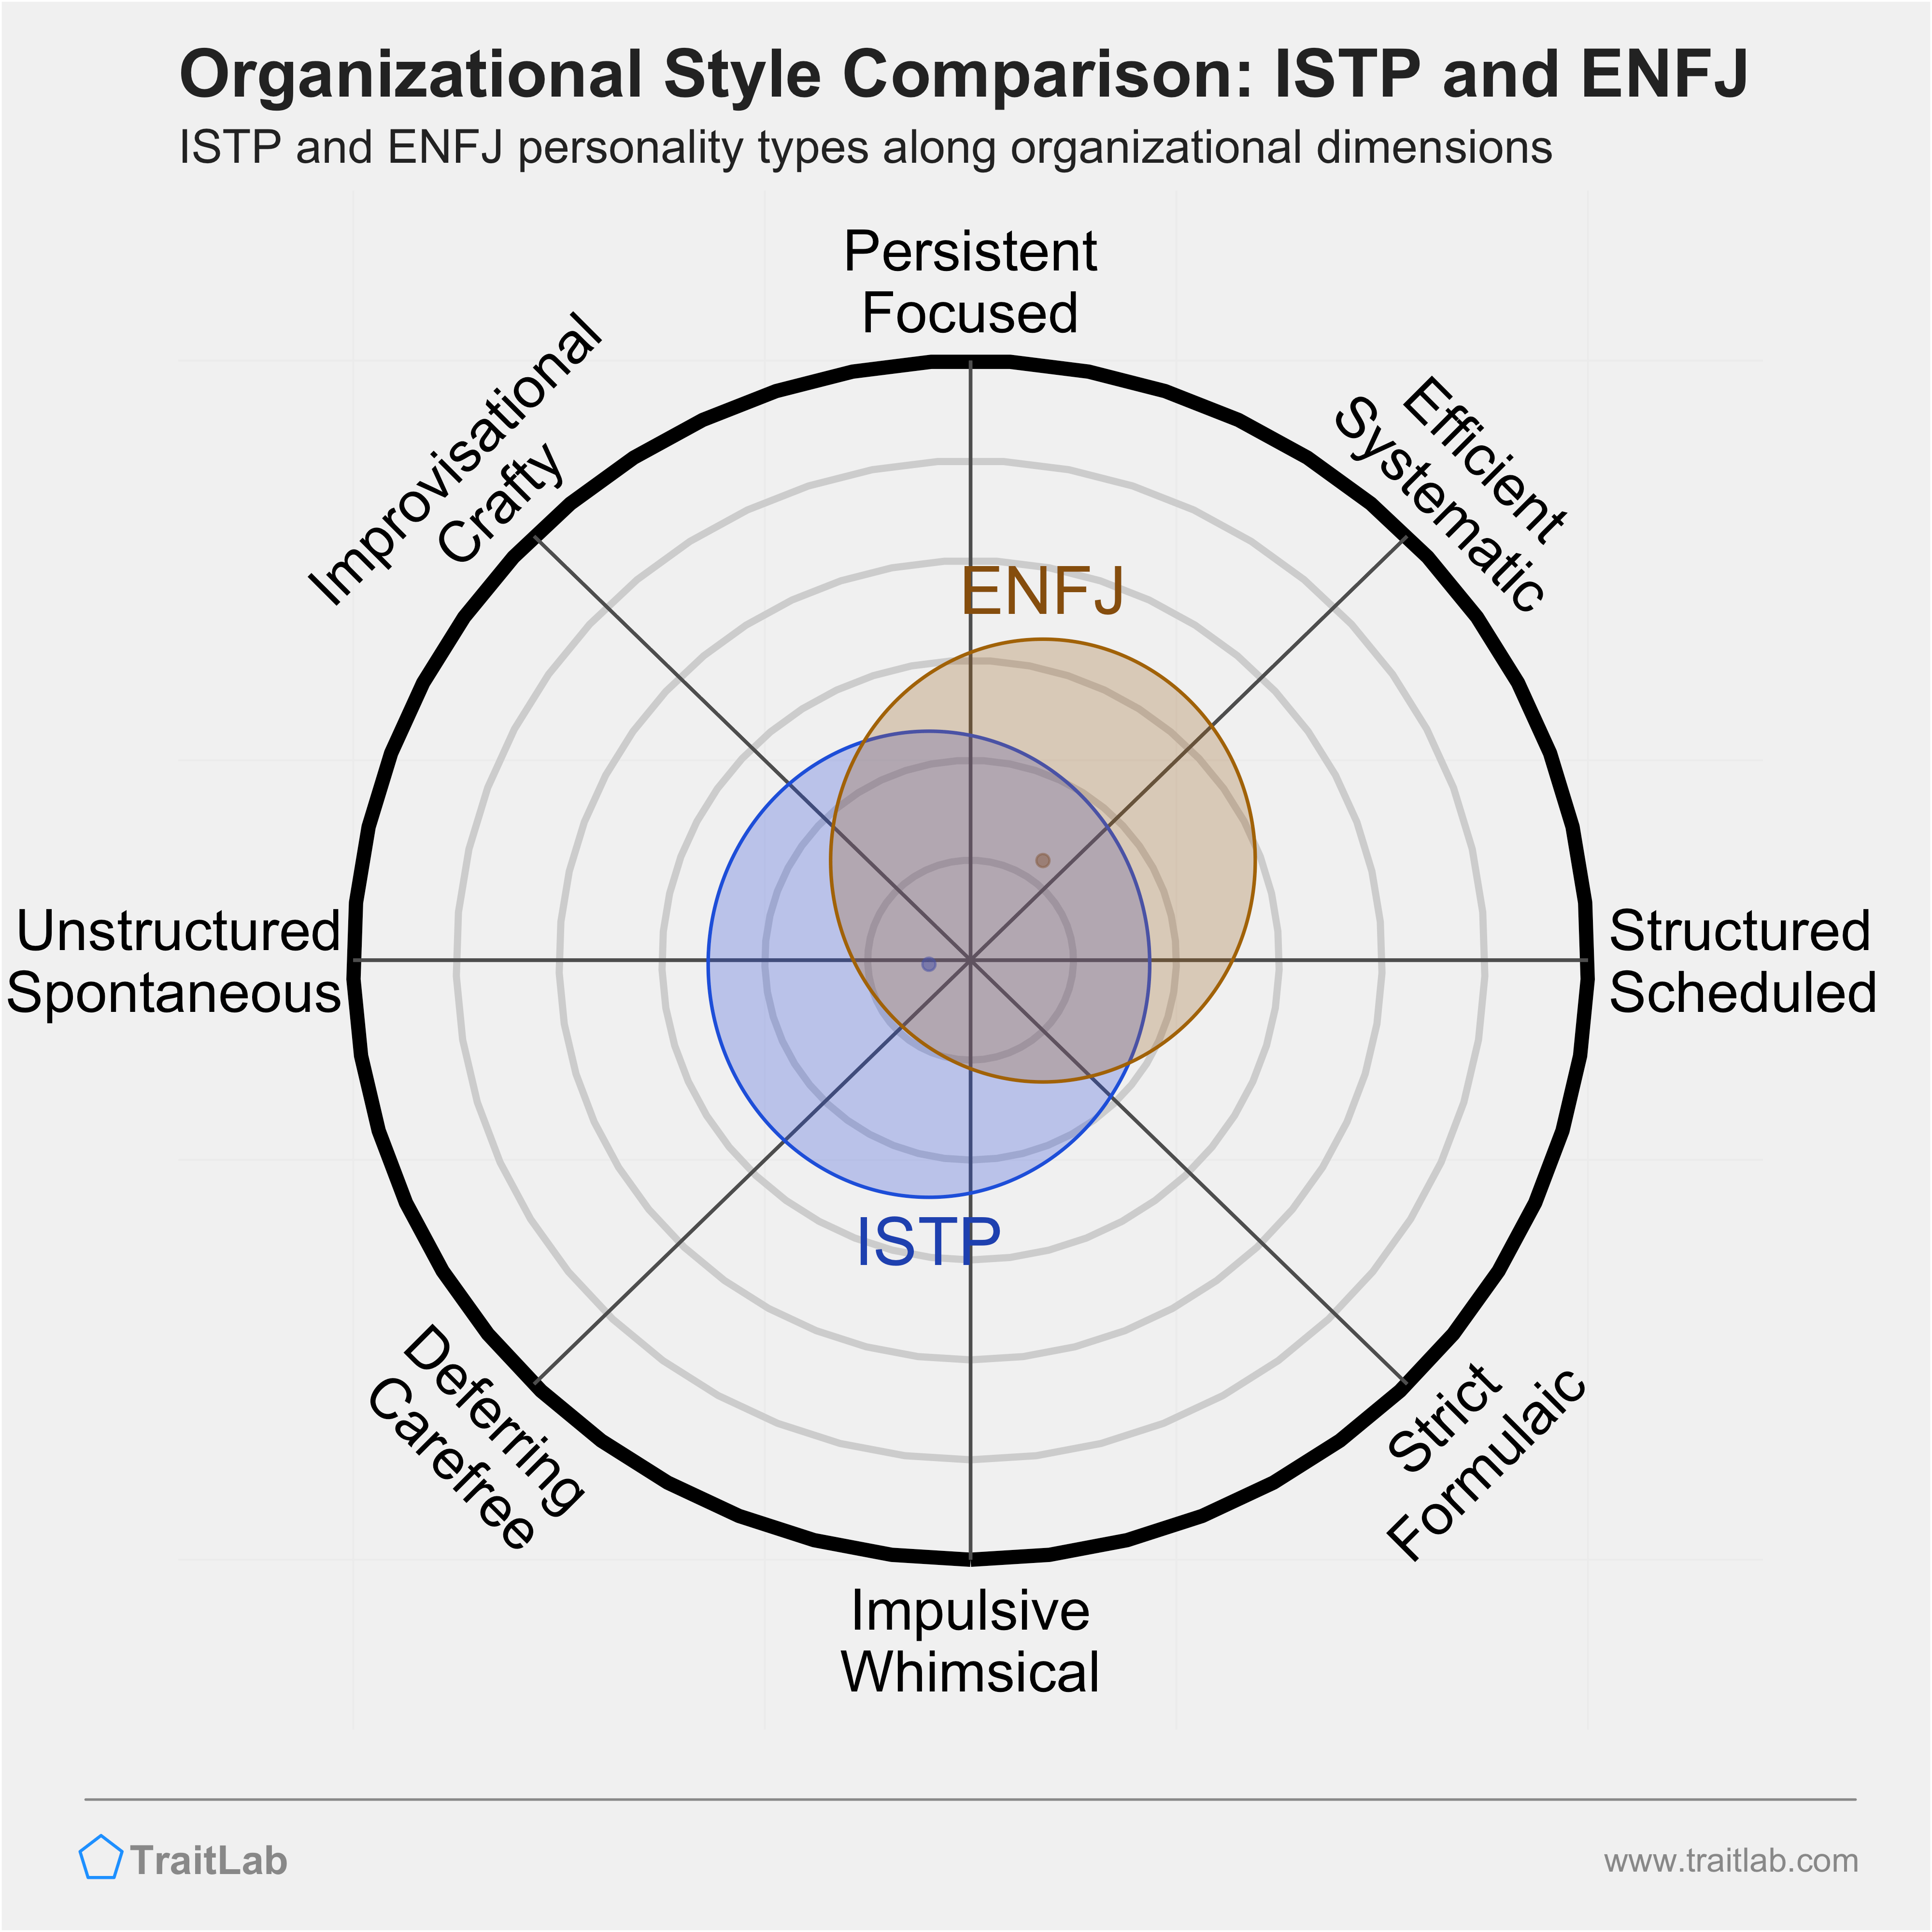 ISTP and ENFJ comparison across organizational dimensions